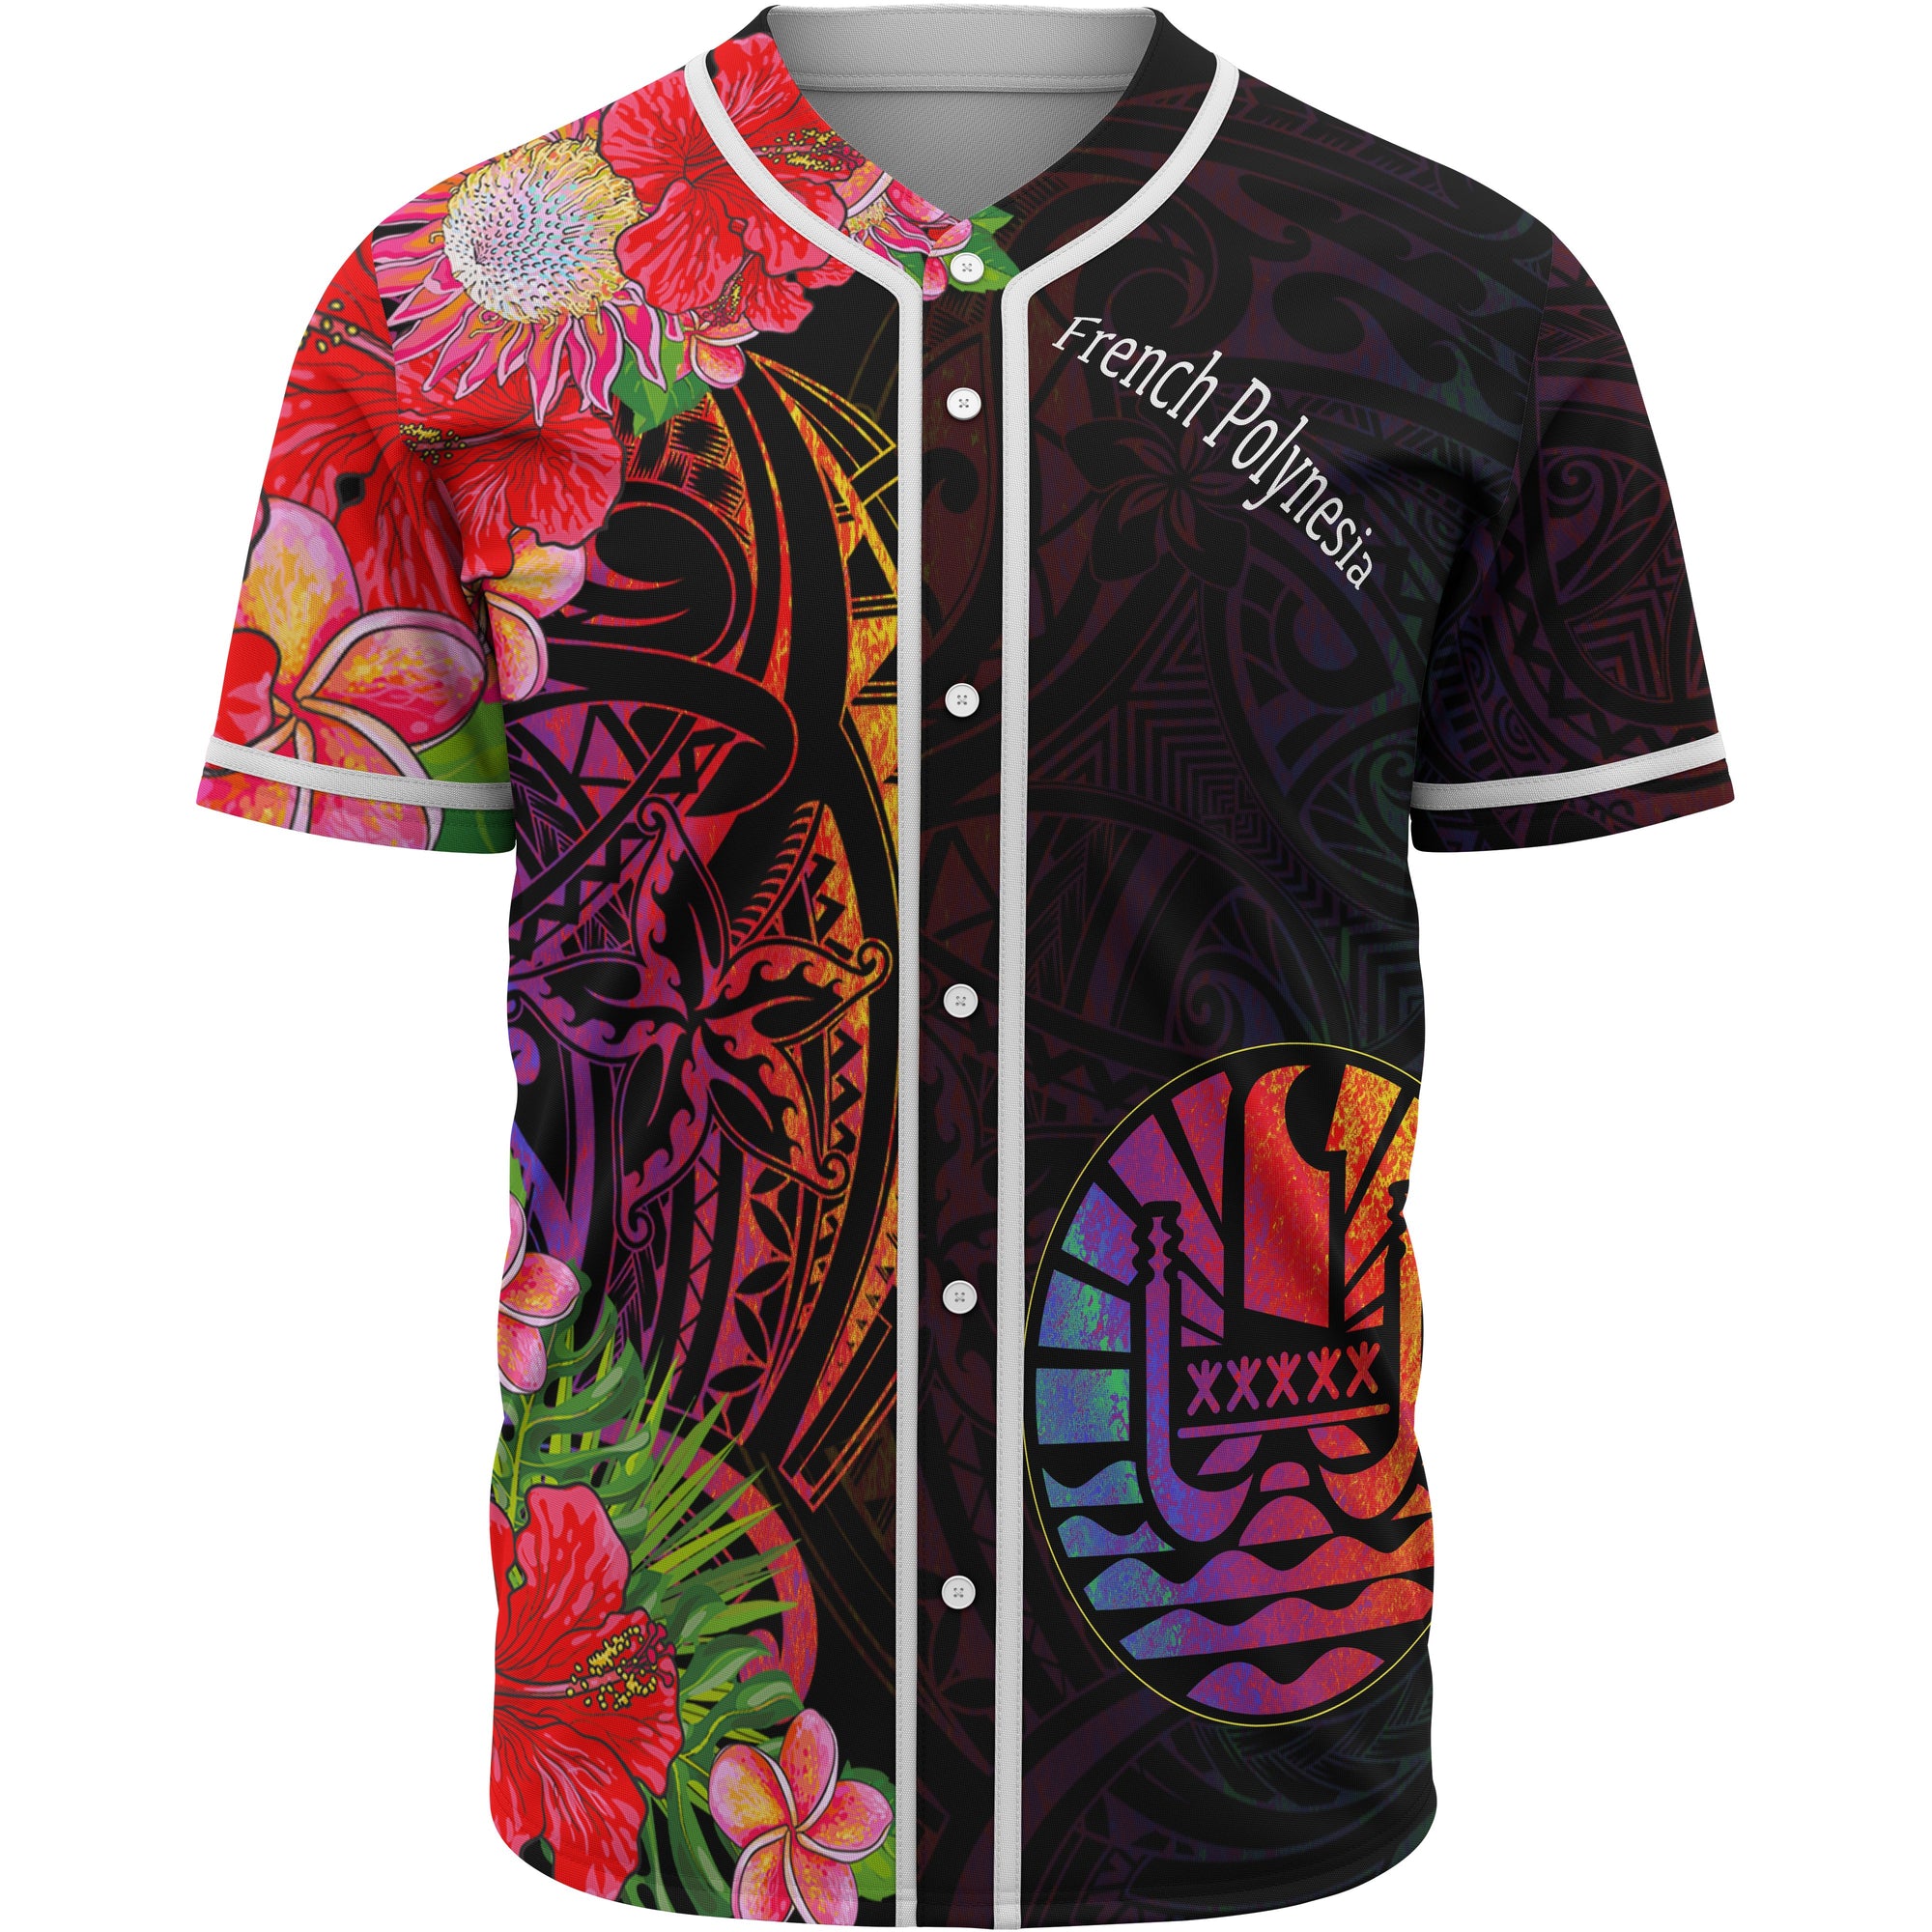 French Polynesia Baseball Shirt - Tropical Hippie Style Unisex Black - Polynesian Pride